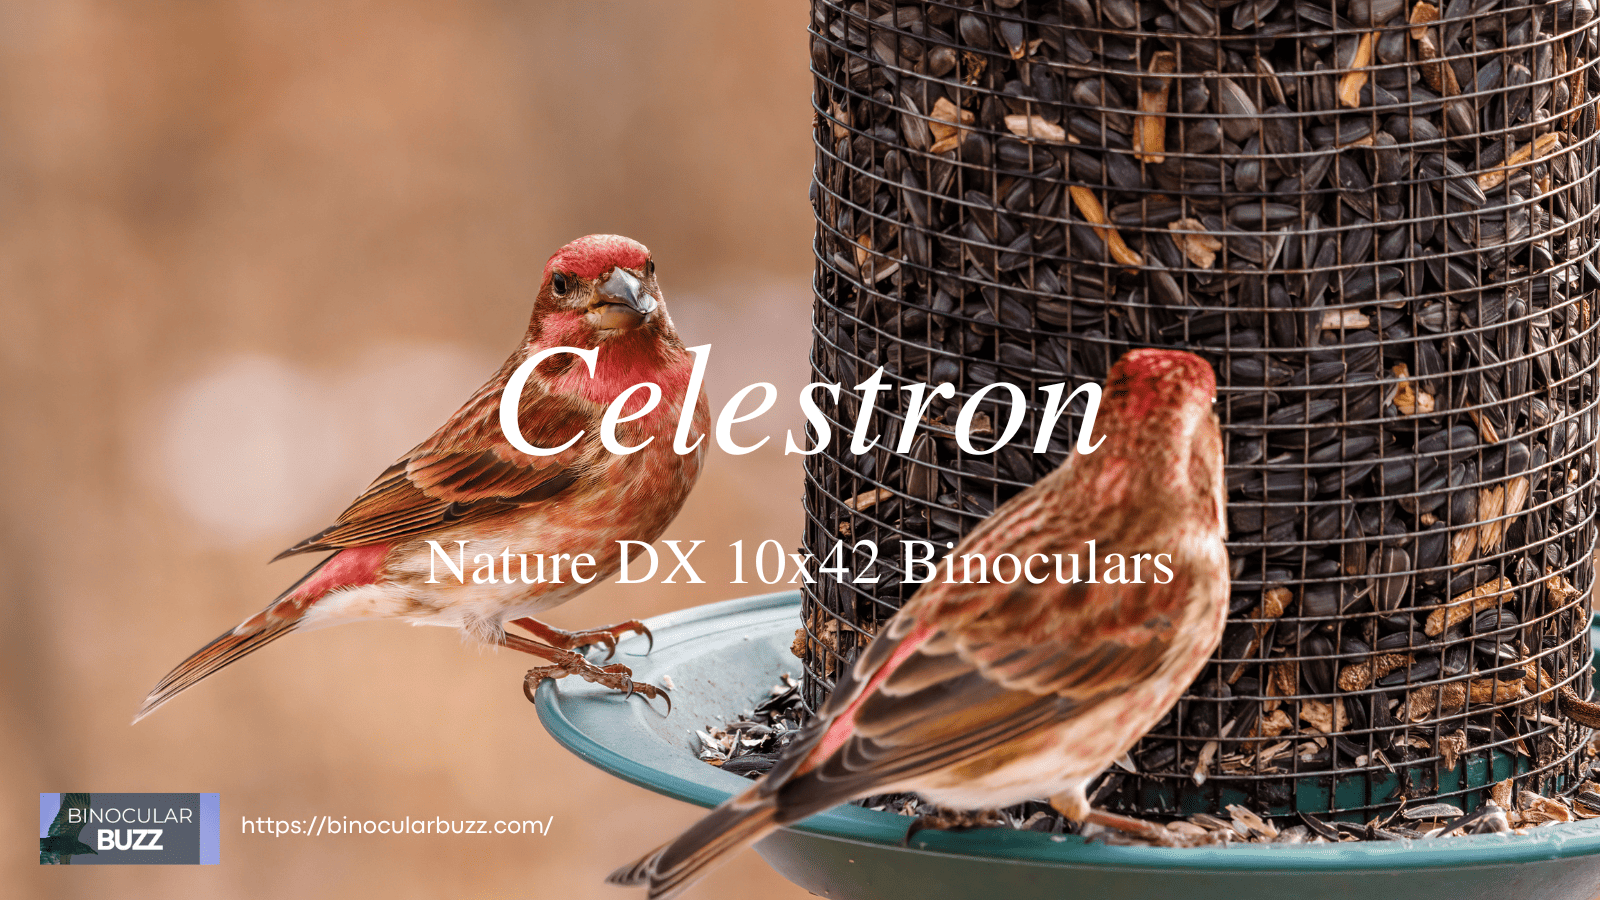 Celestron Nature DX 10x42 Binoculars Review